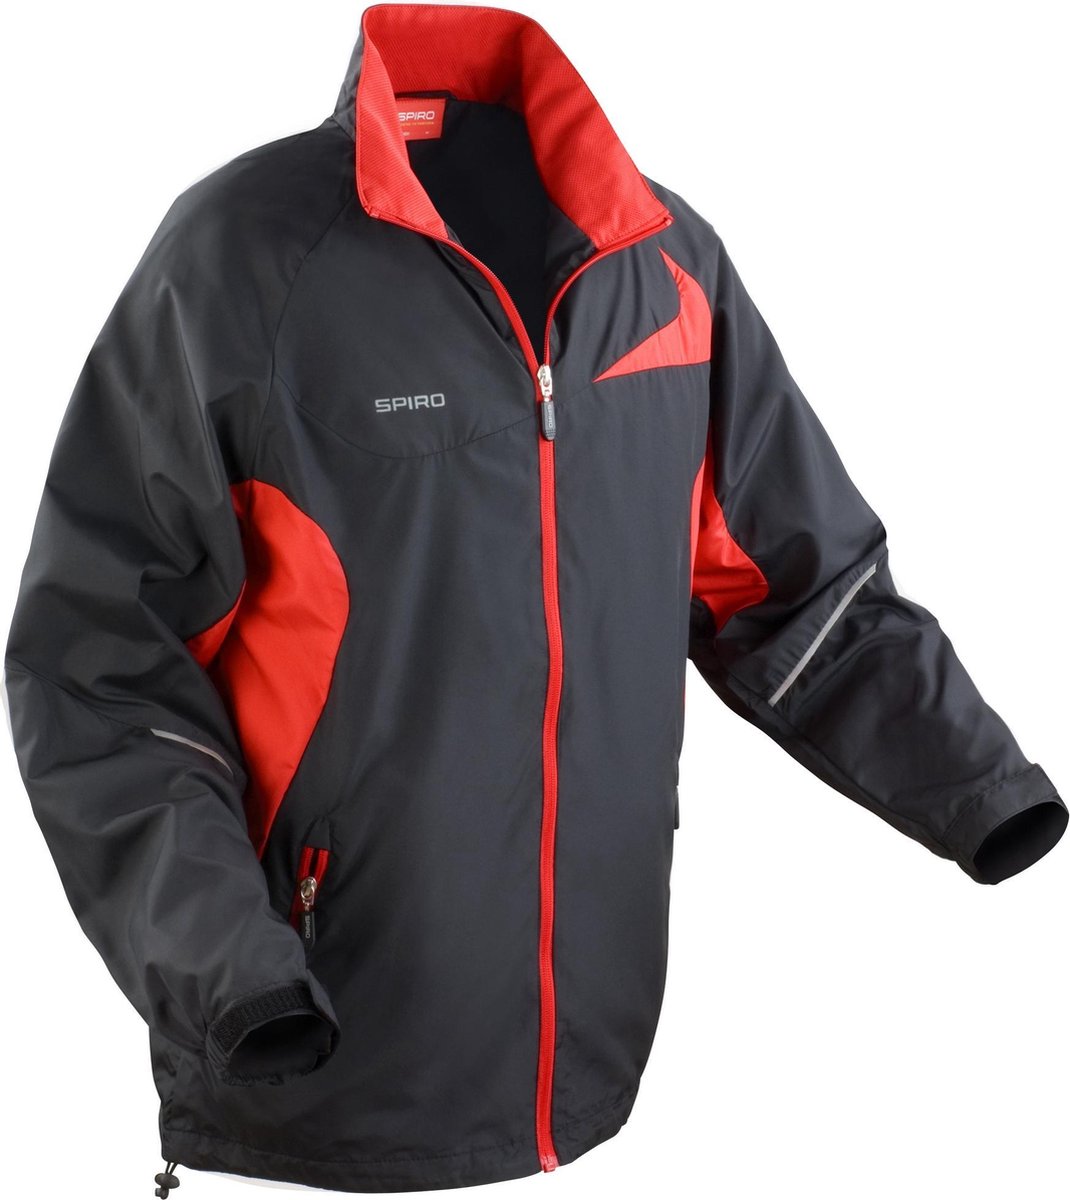 Spiro Heren Micro-Lite Performance Sports Jacket (Waterafstotend, Windbestendig & Ademend) (Zwart/Rood)